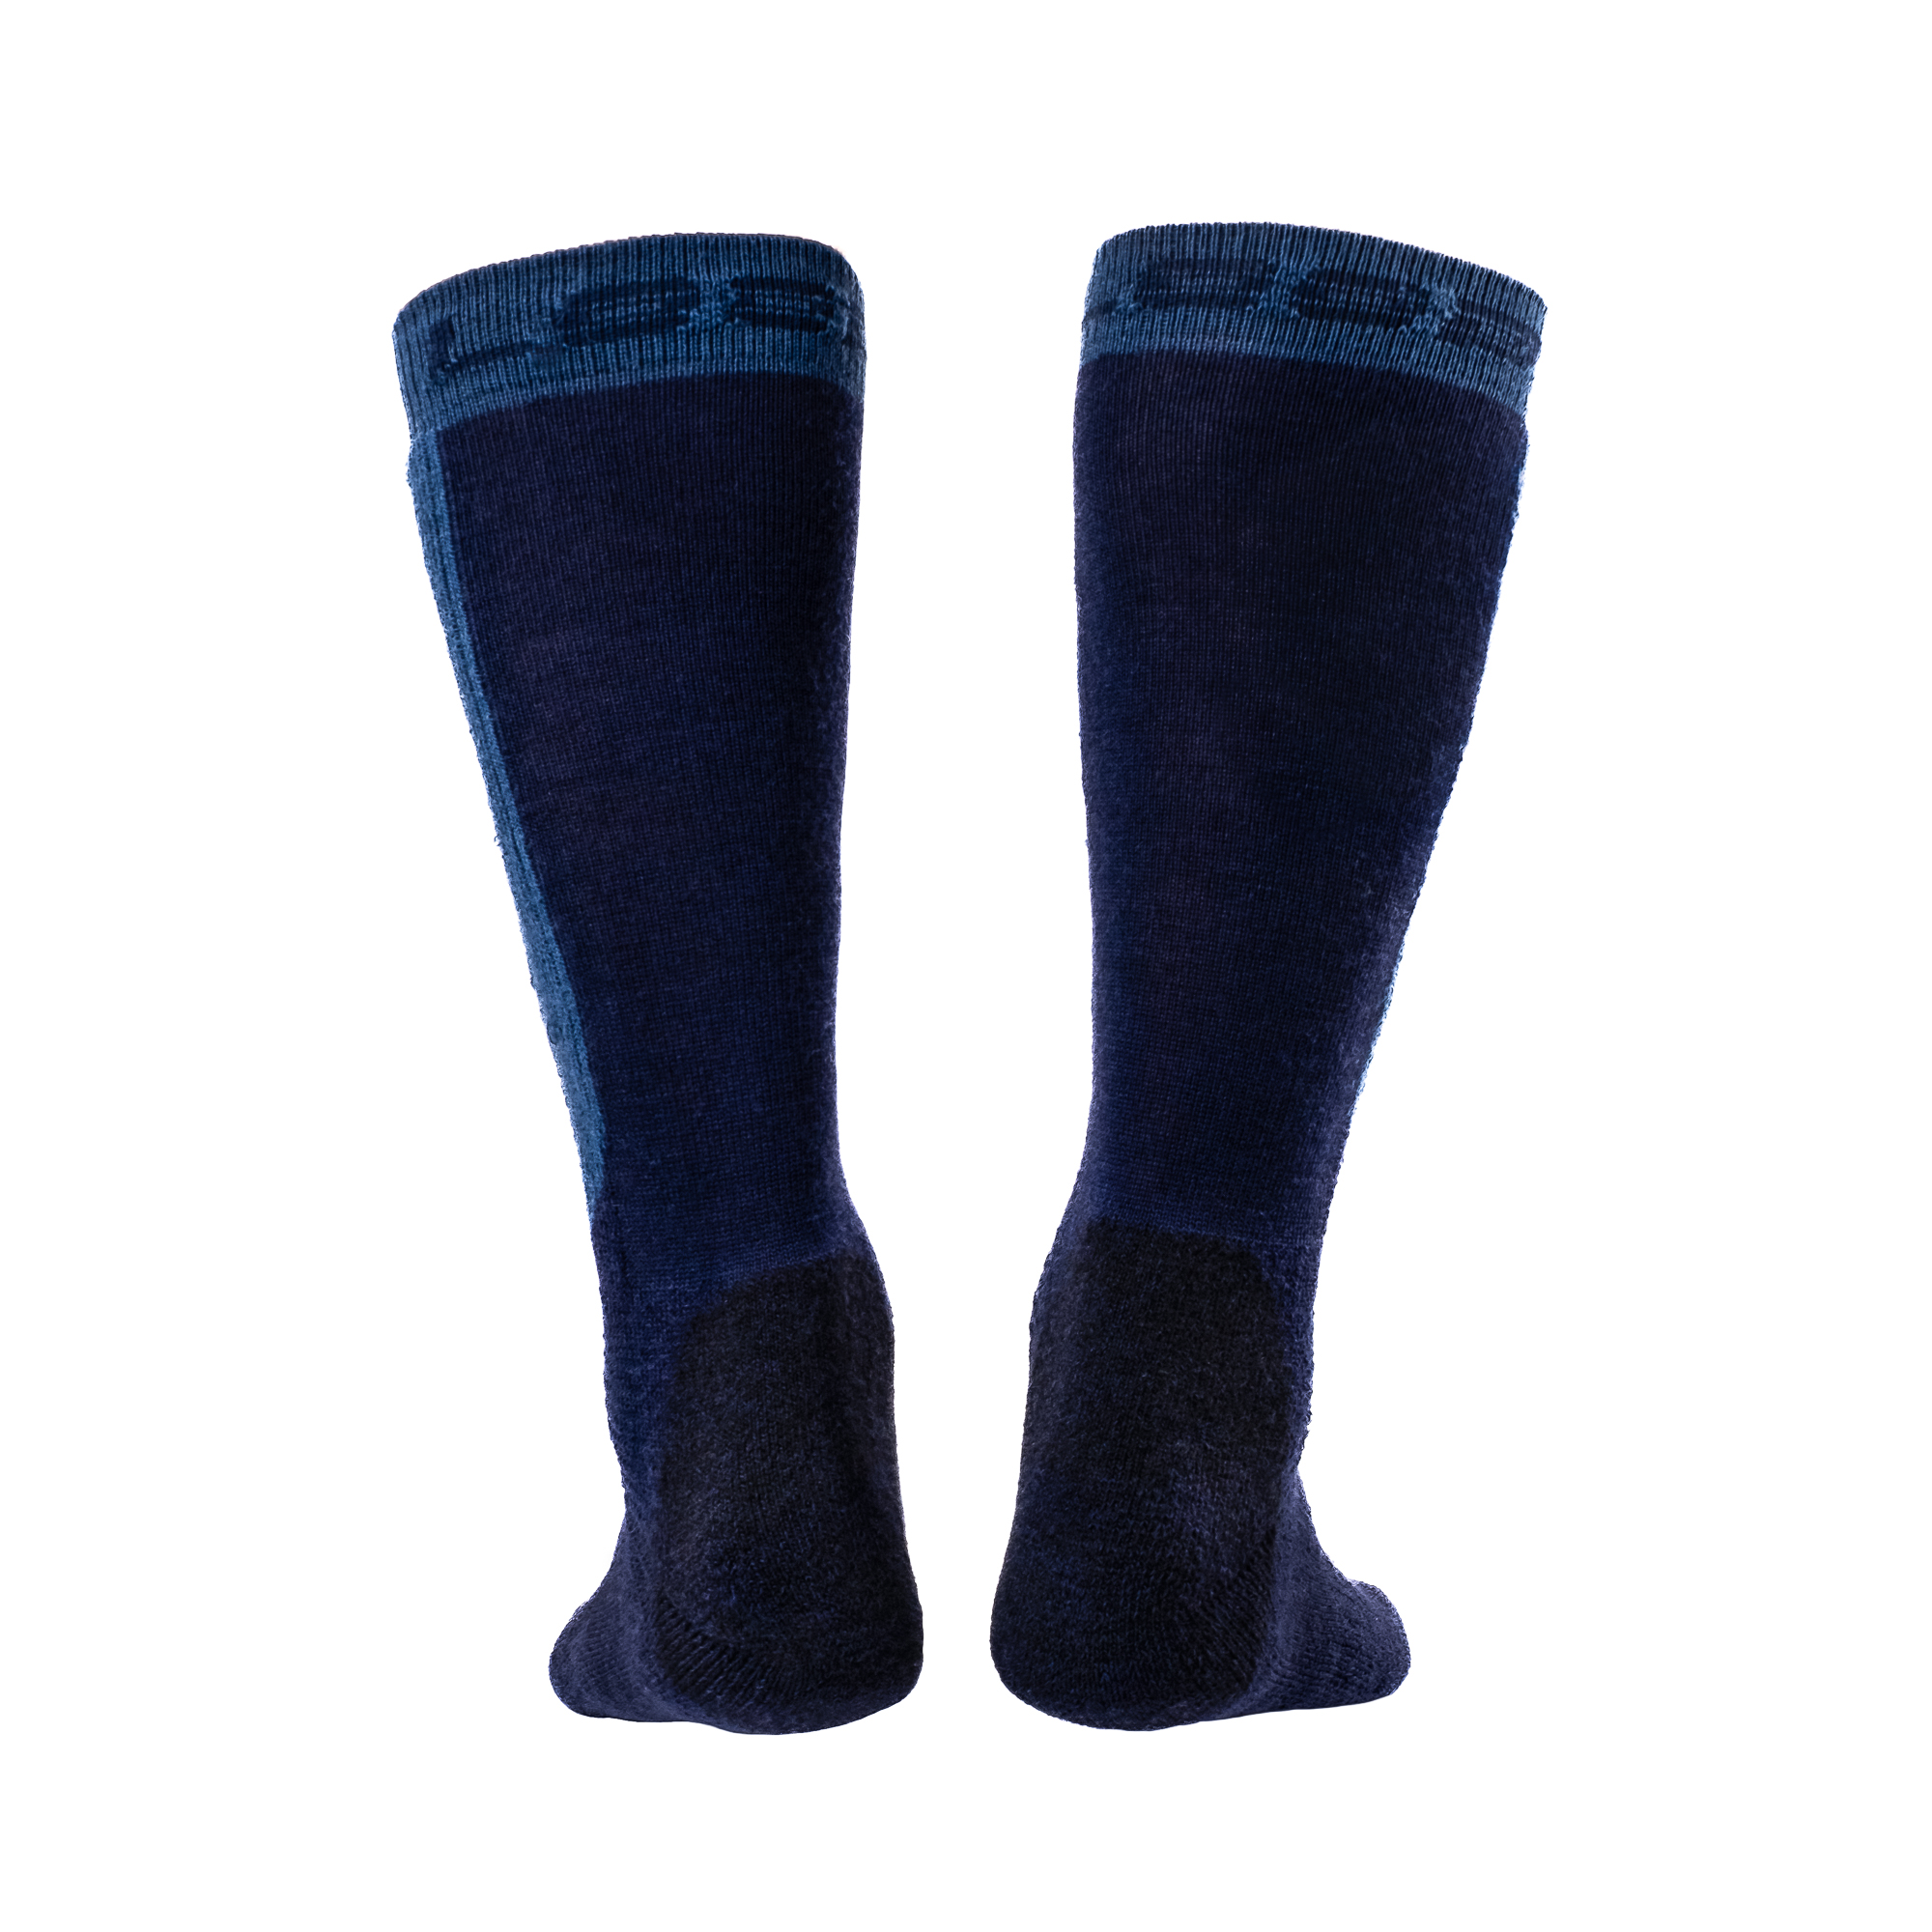 Merino Wool Wading Socks, Fly Fishing Socks